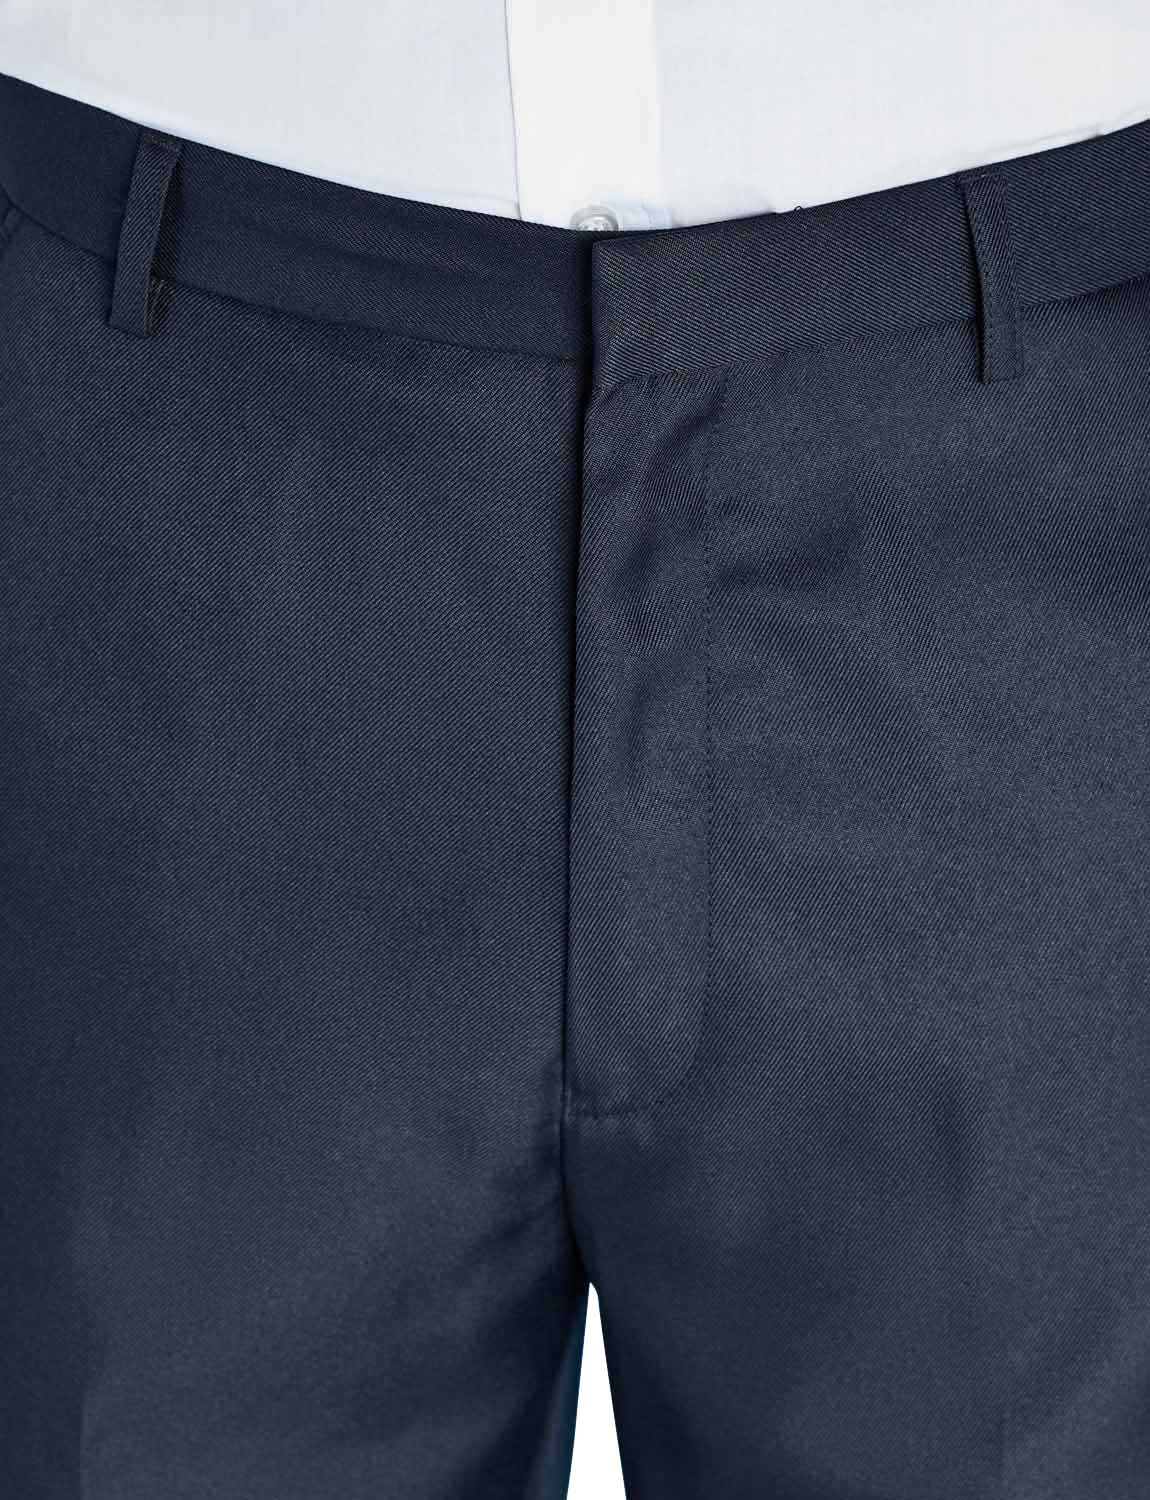 Chums Men's Stretch Waist Formal Smart Work Trousers Hidden Elasticated  Waist Smart Work Pants Black : Amazon.co.uk: Fashion